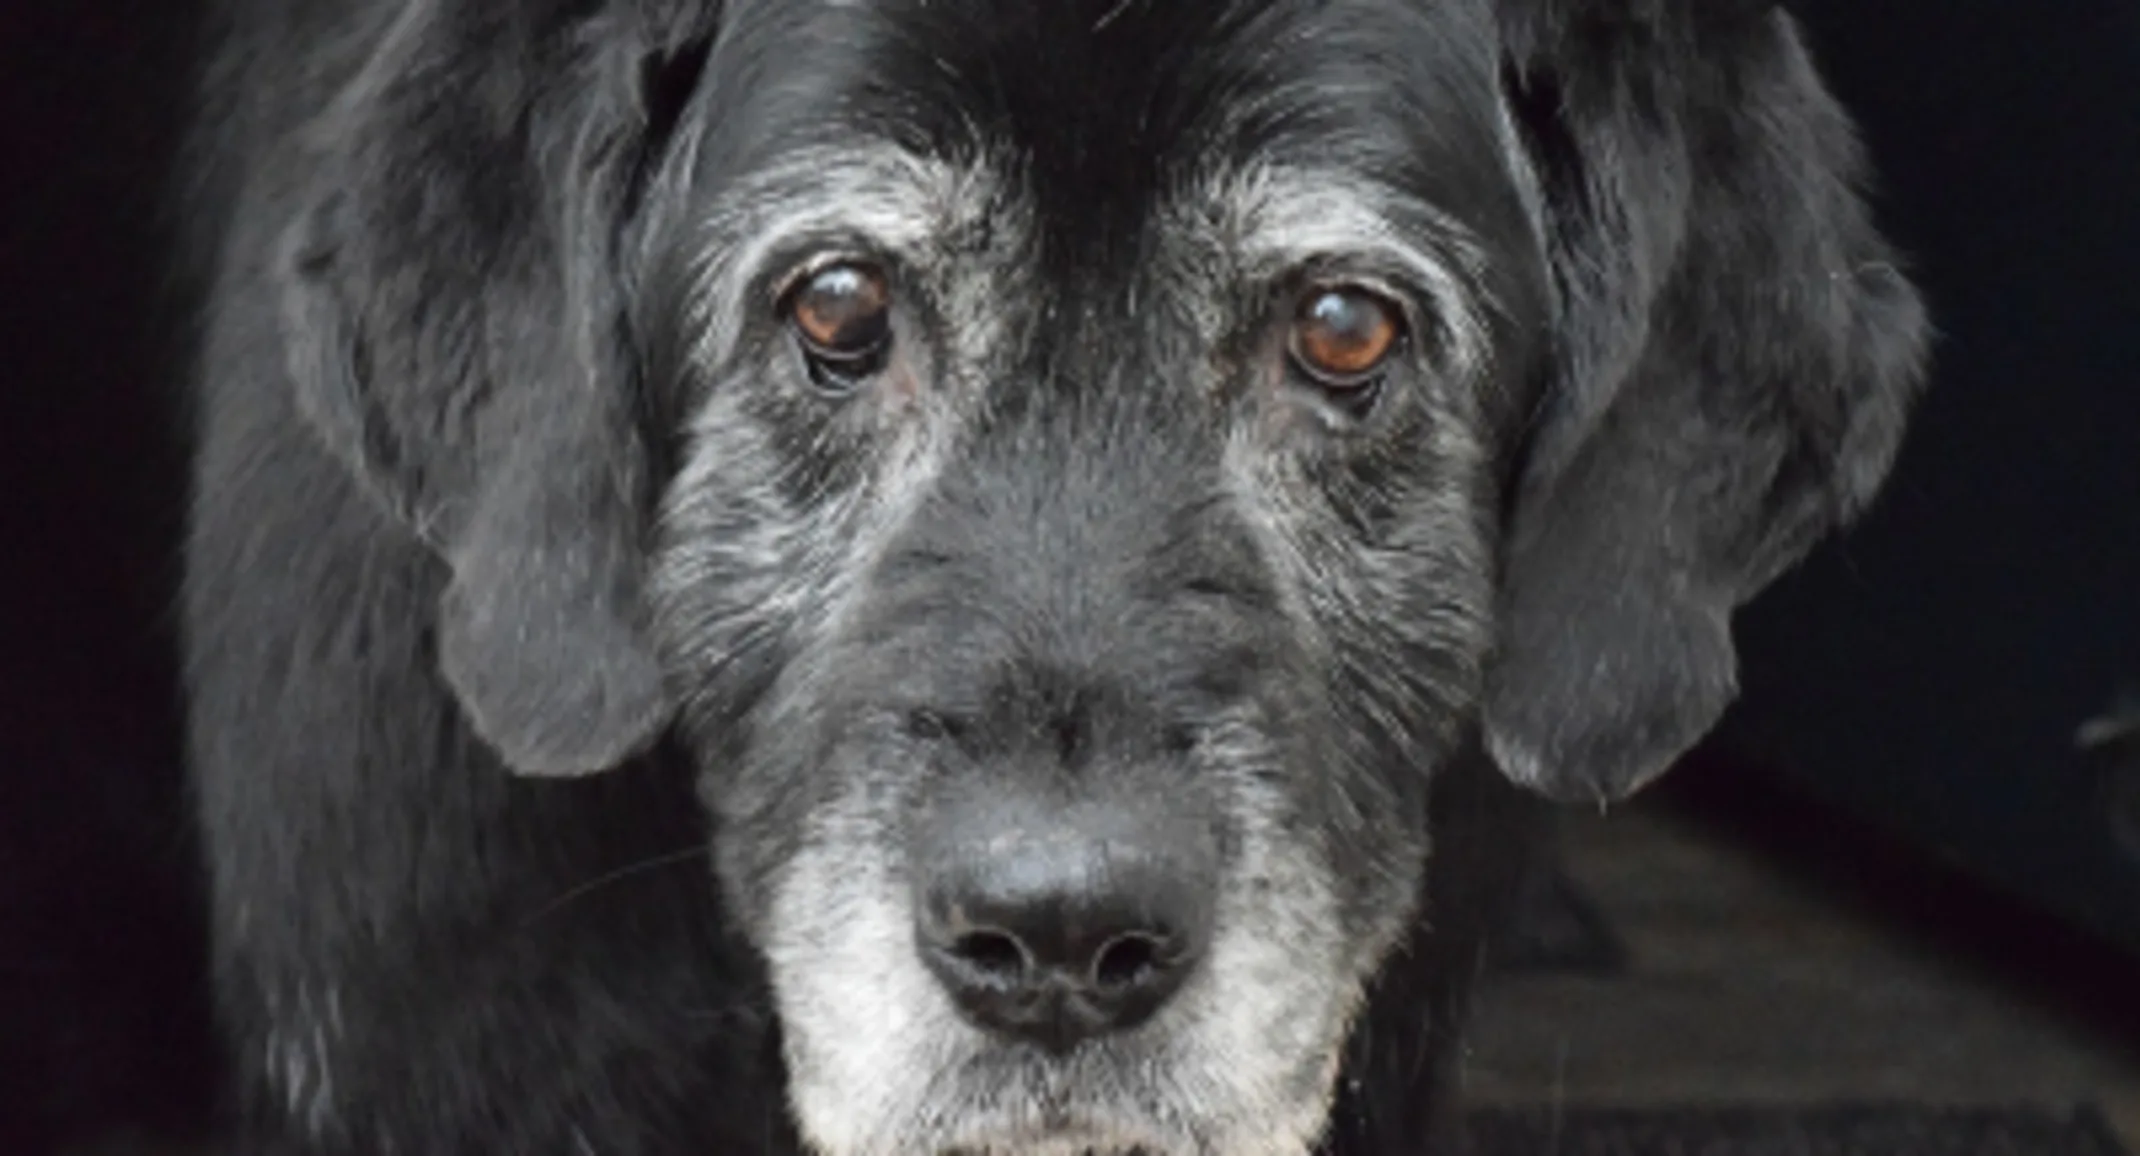 A black and gray senior dog